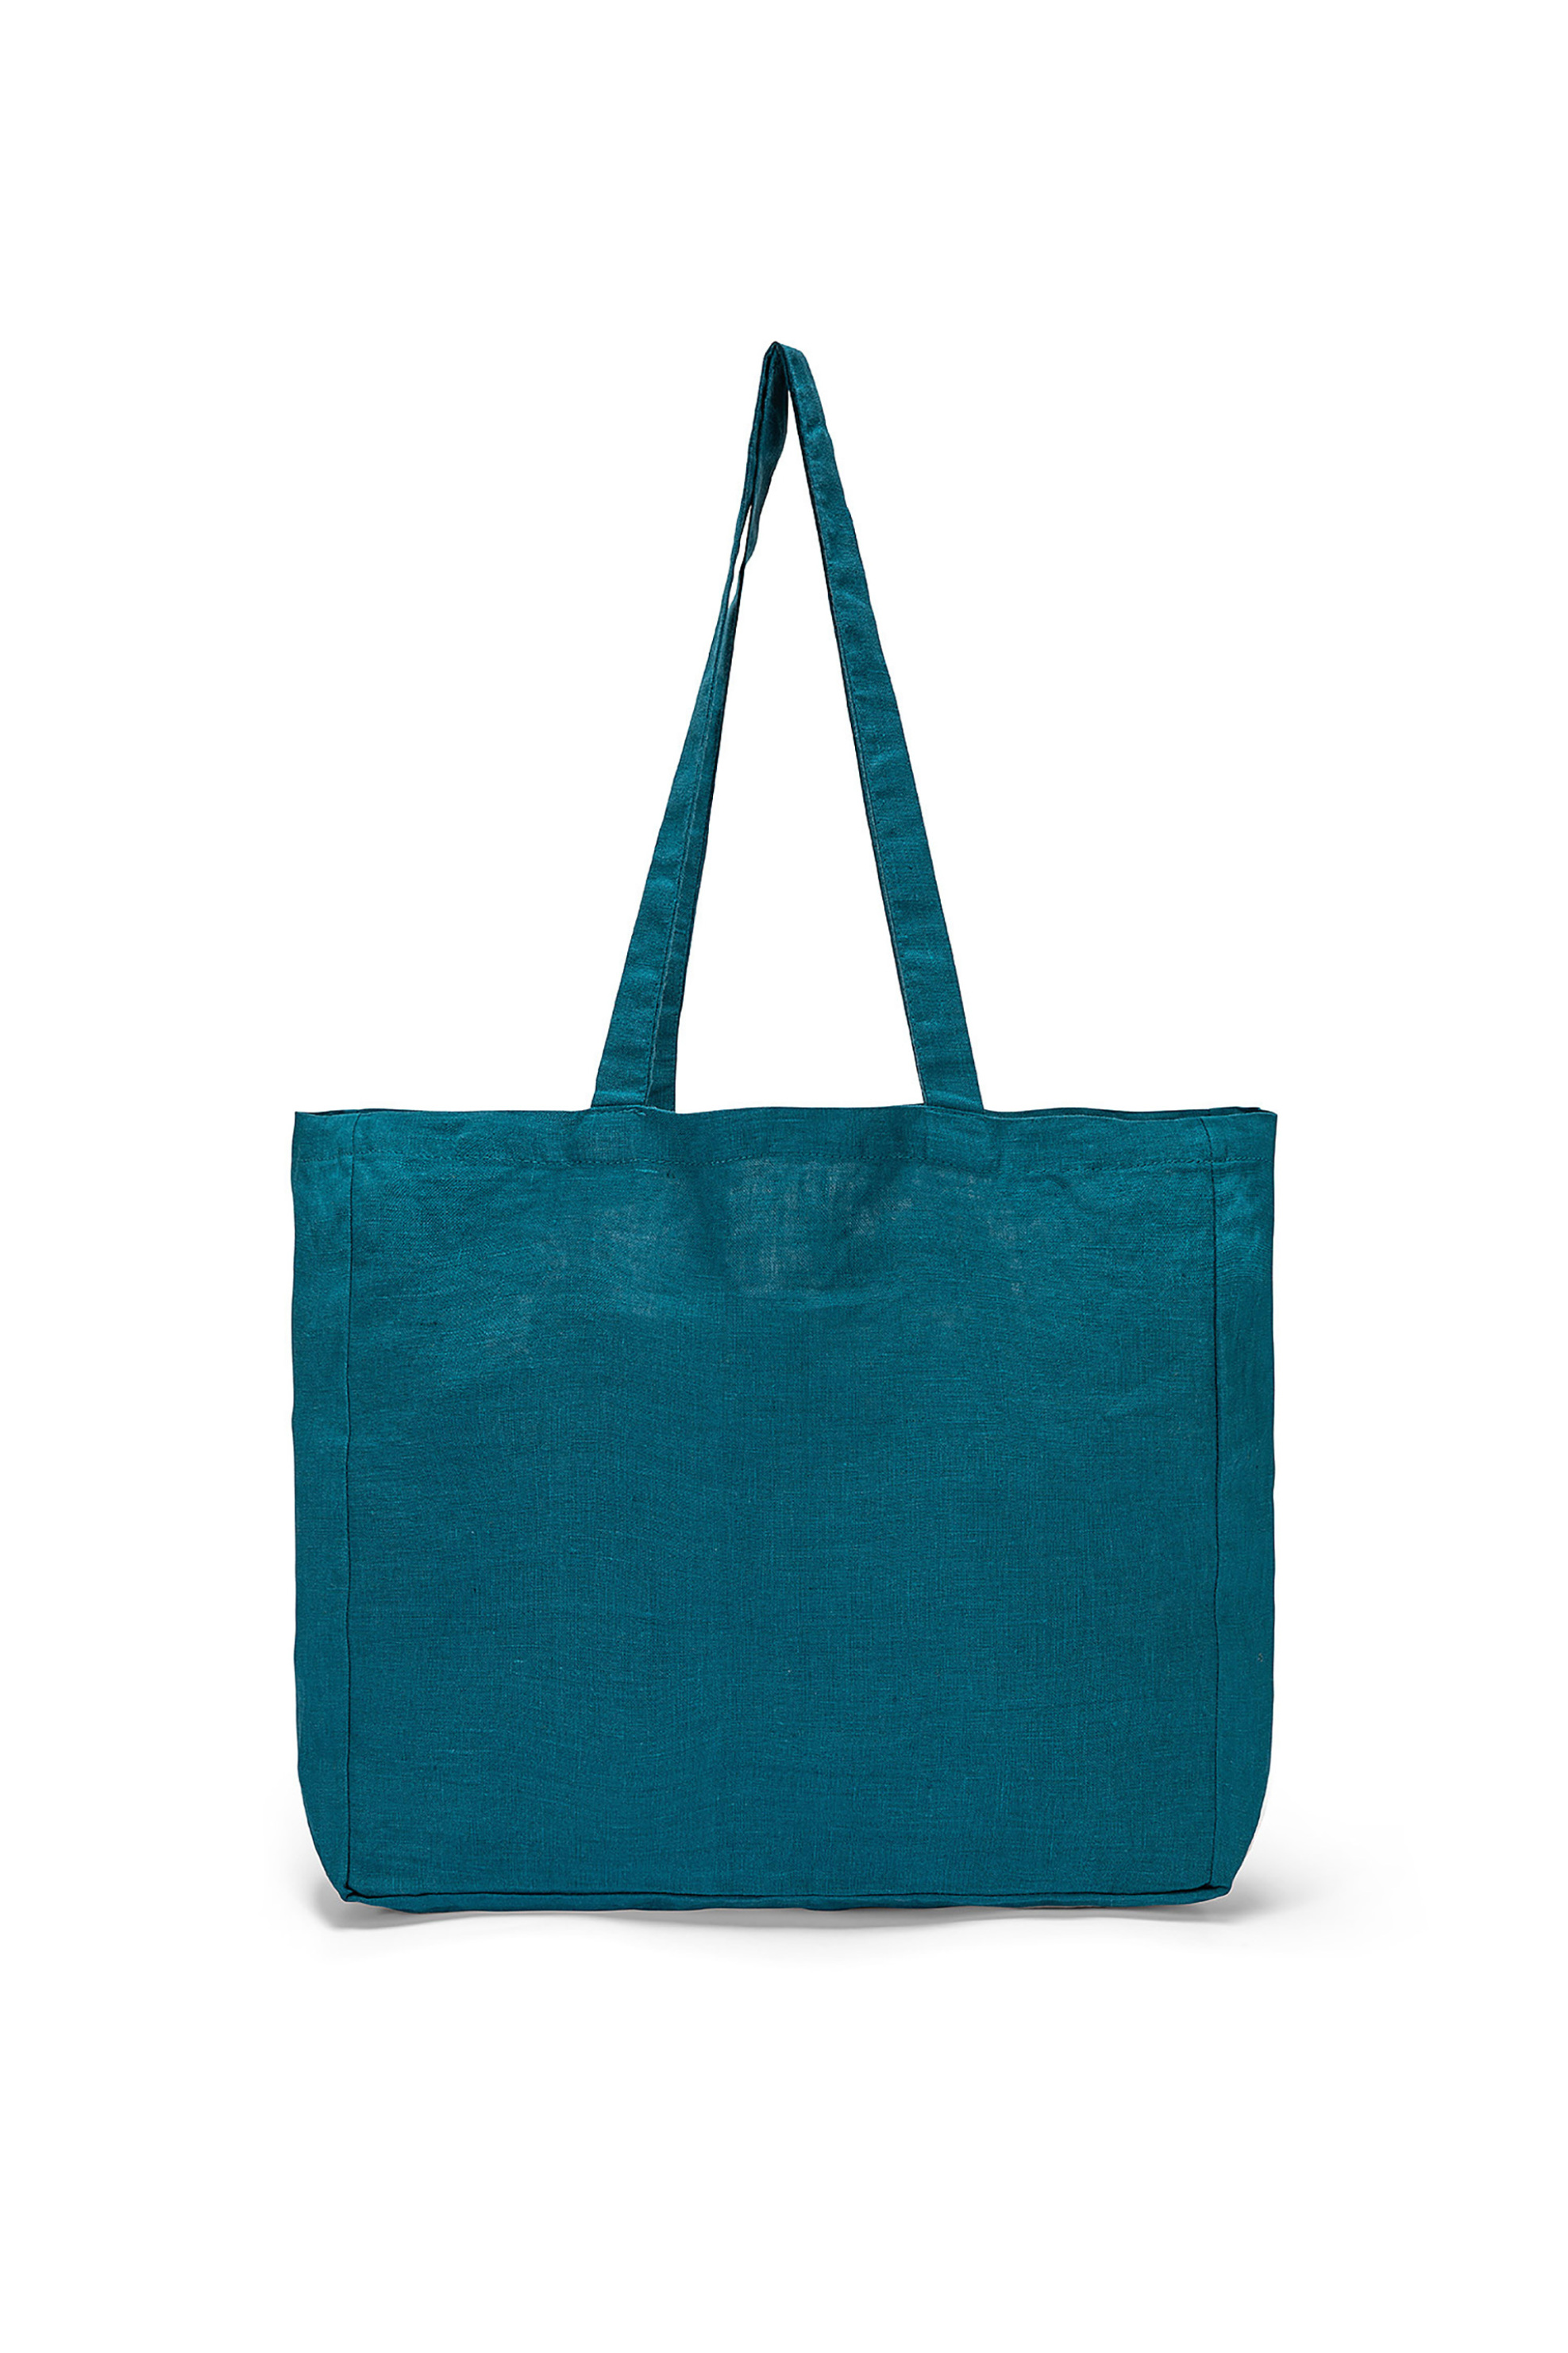 Home > ΚΟΥΖΙΝΑ > Είδη μεταφοράς > Τσάντες για ψώνια Coincasa τσάντα για ψώνια μονόχρωμη "Linen Joy" 35 x 35 x 10 cm - 007219343 Πετρόλ